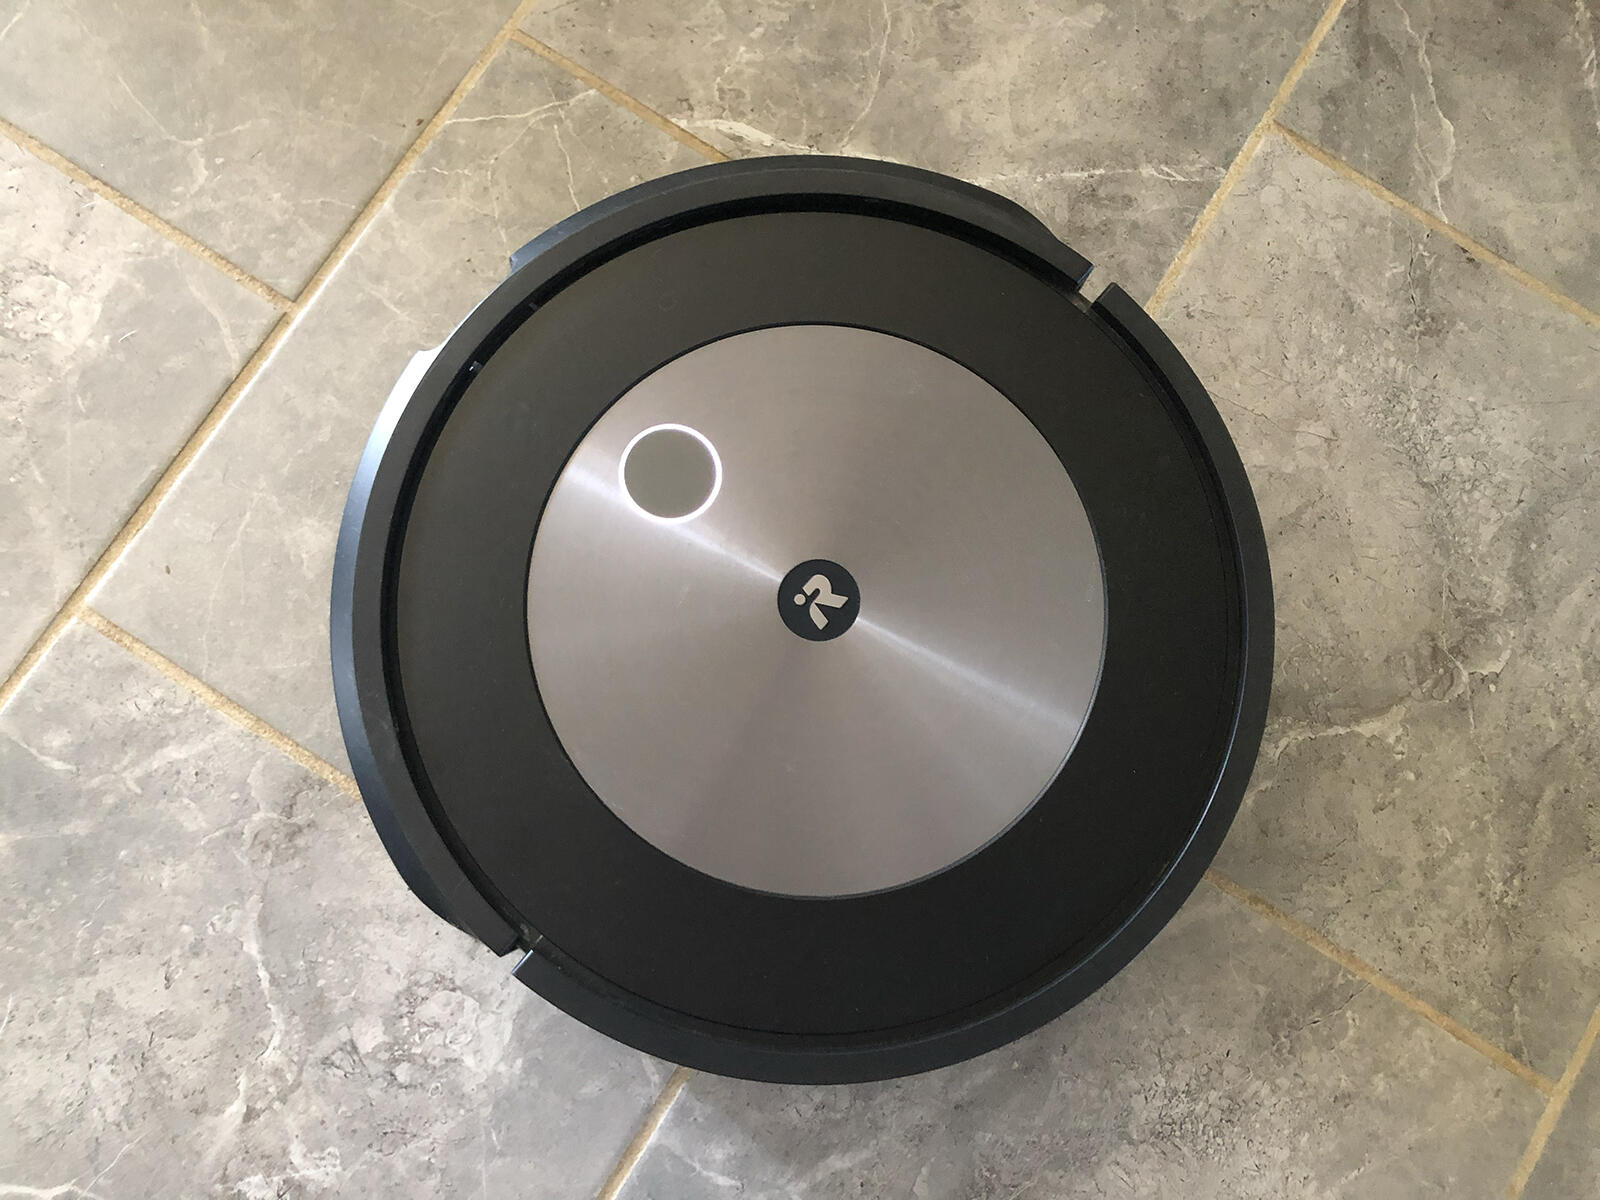 iRobot Roomba j7+ Wifi Connected Self Emptying Robot Vacuum